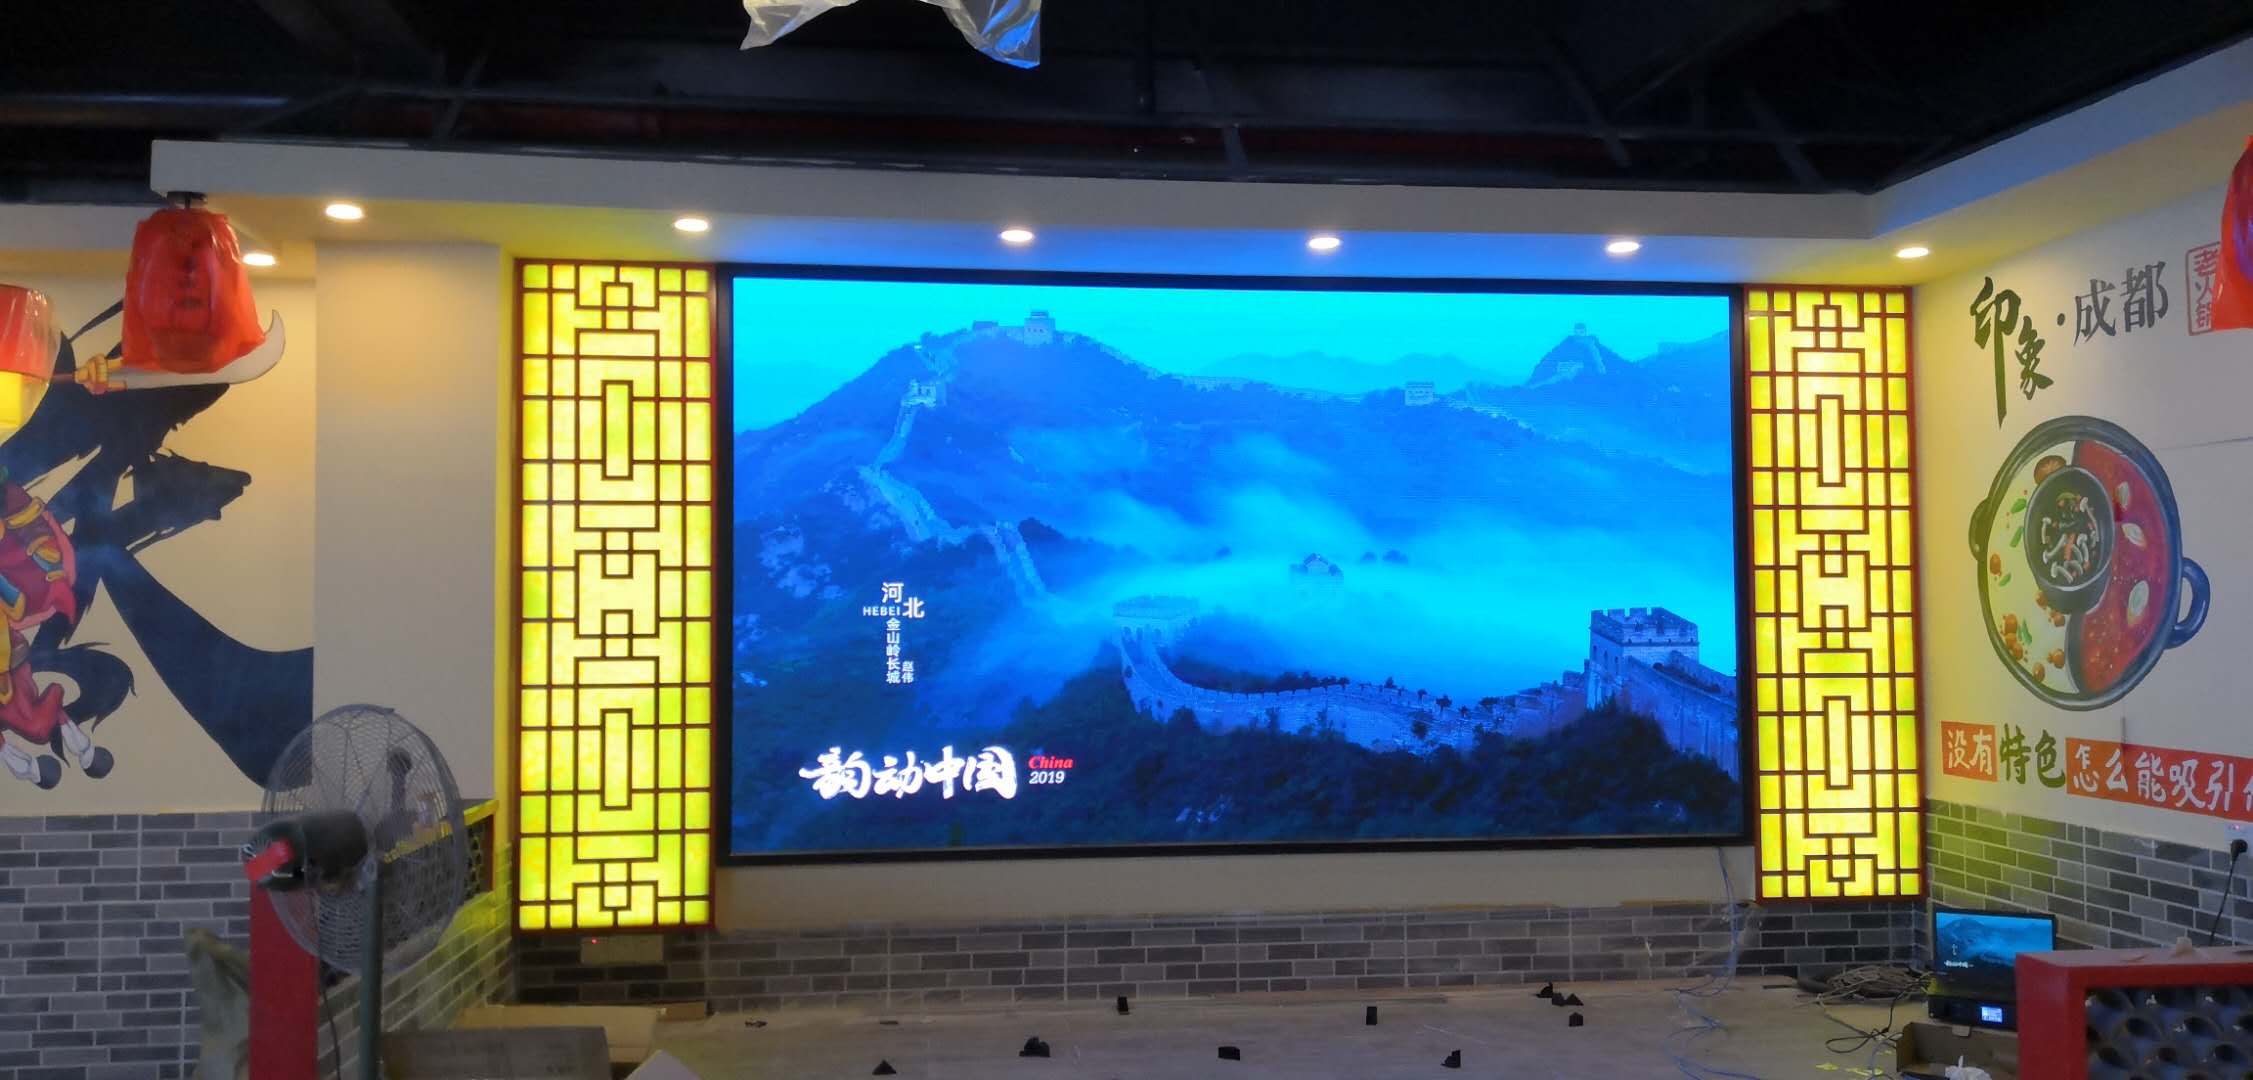 P2.5全彩LED显示屏-壁挂支架-深圳市宝安区印象成都老火锅